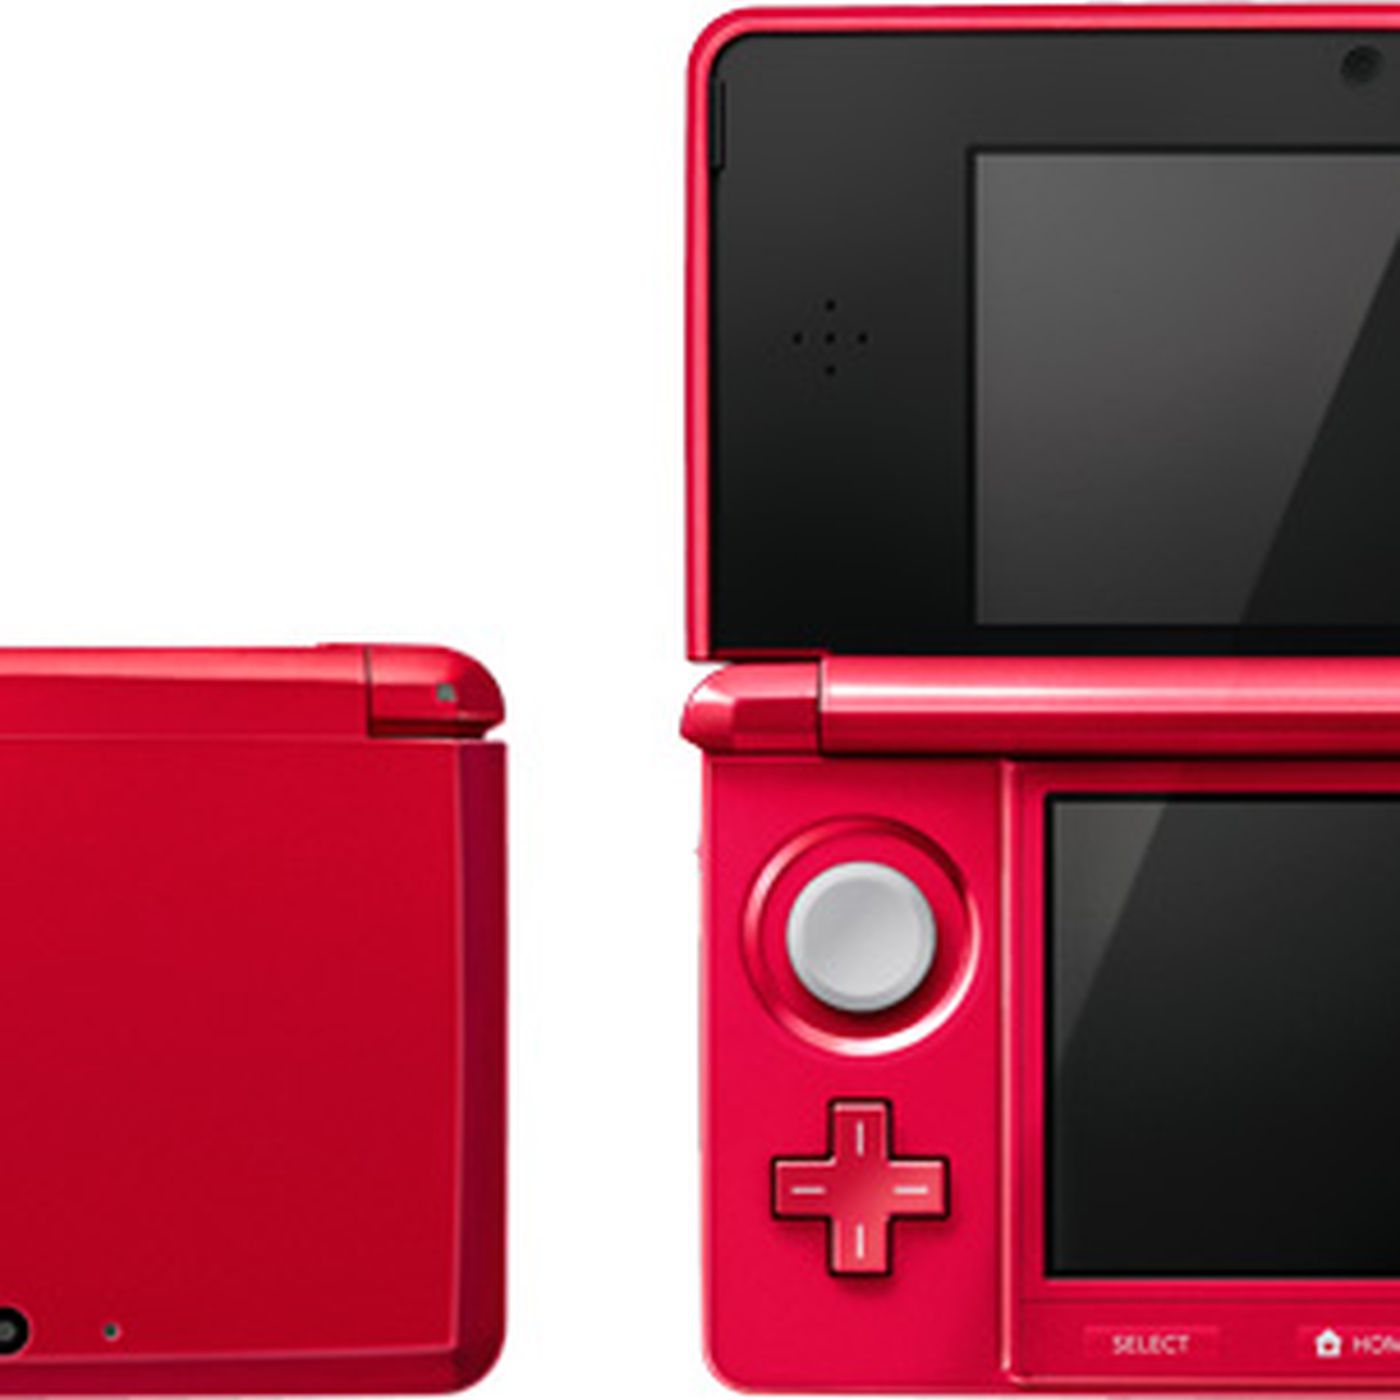 Nintendo launching 3DS in Metallic Red on June 13 in Japan - Polygon